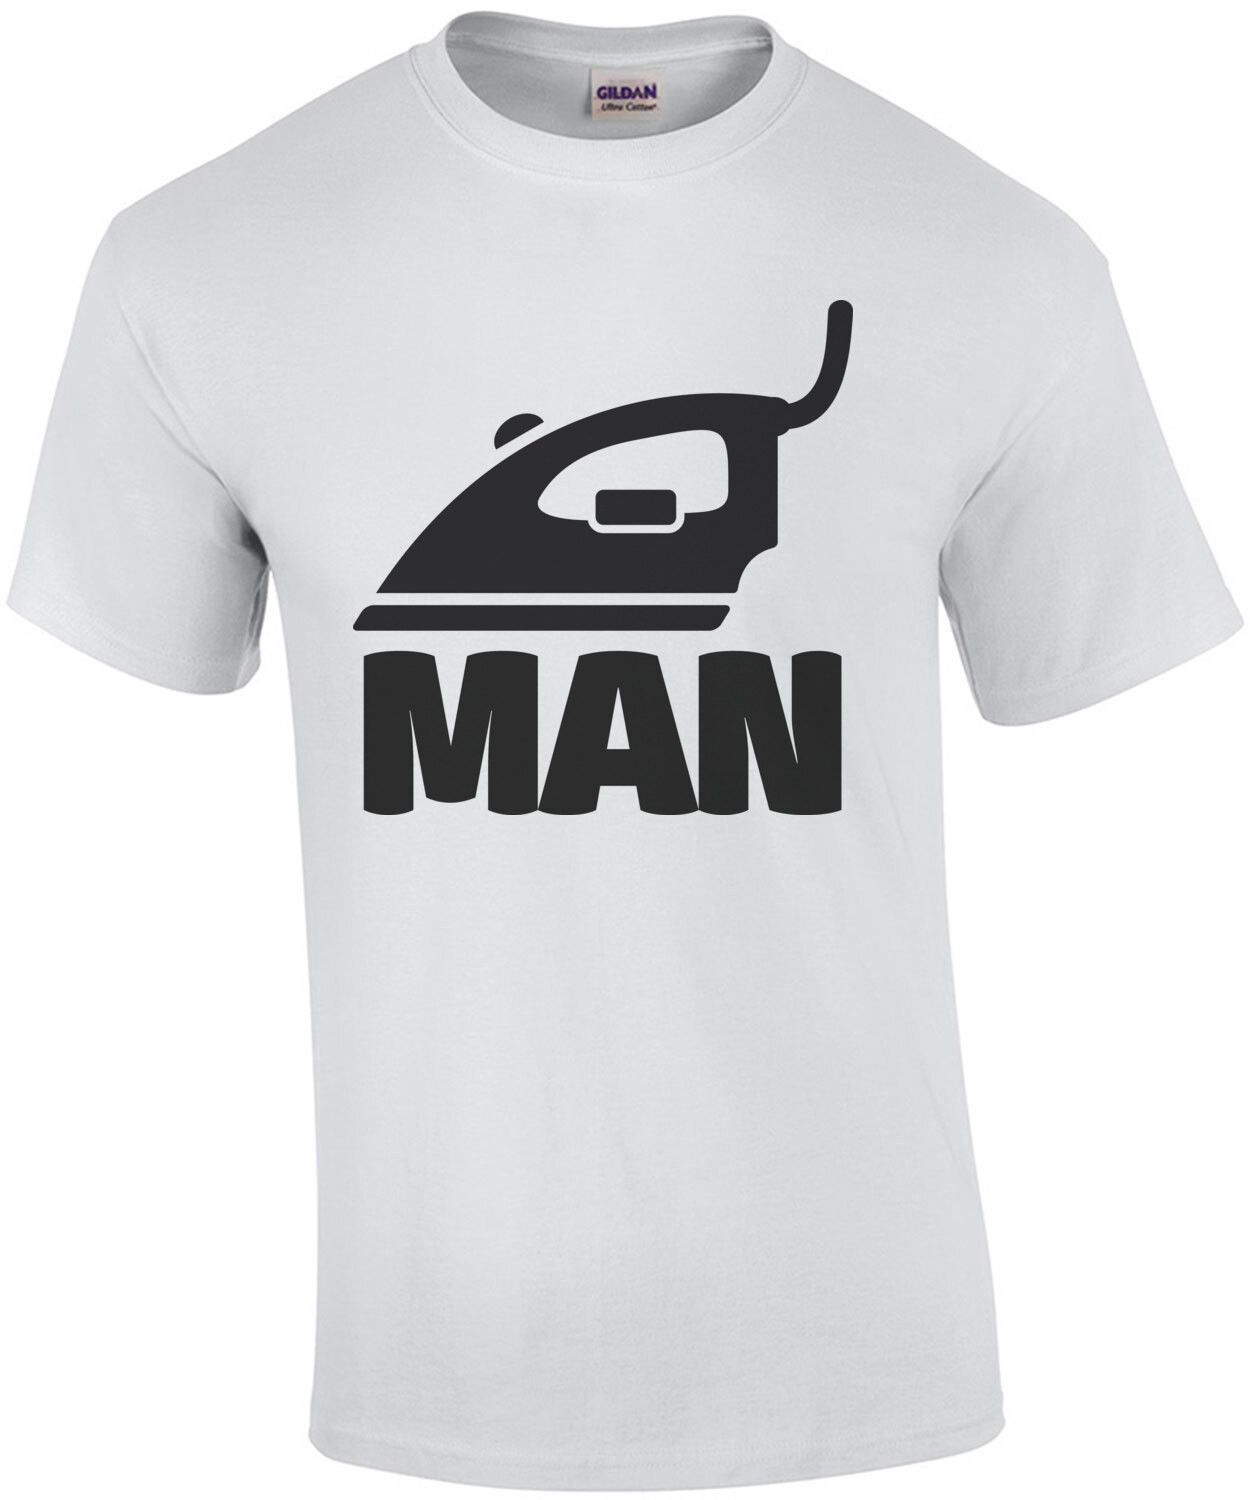 Iron Man - Parody Pun T-Shirt